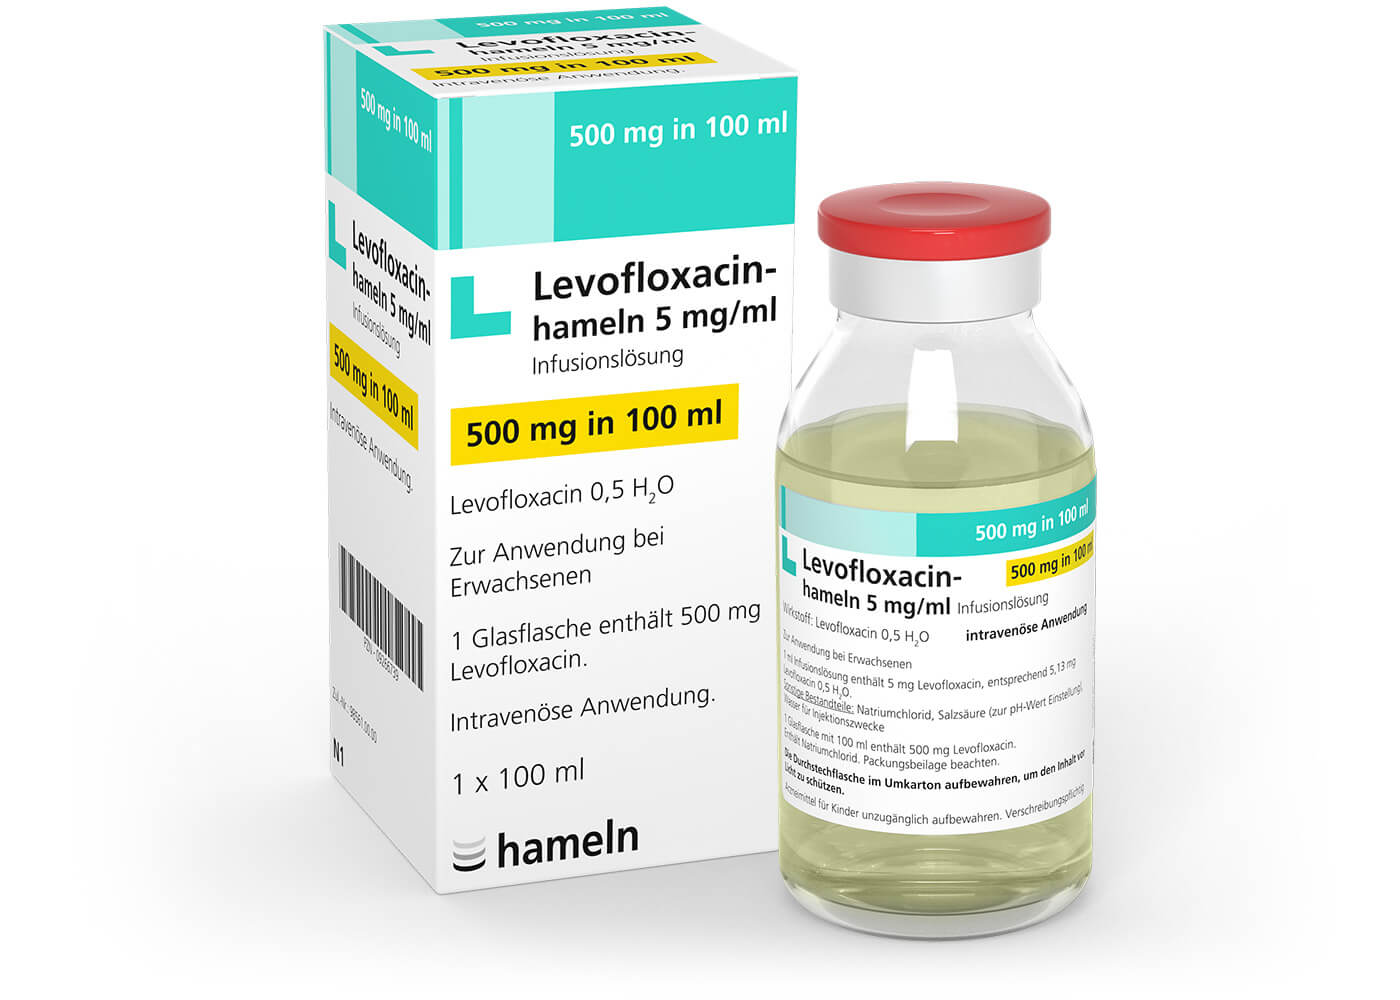 Levofloxacin_DE_5_mg-ml_in_100_ml_Pack_Vial_1St_SH_2020-01